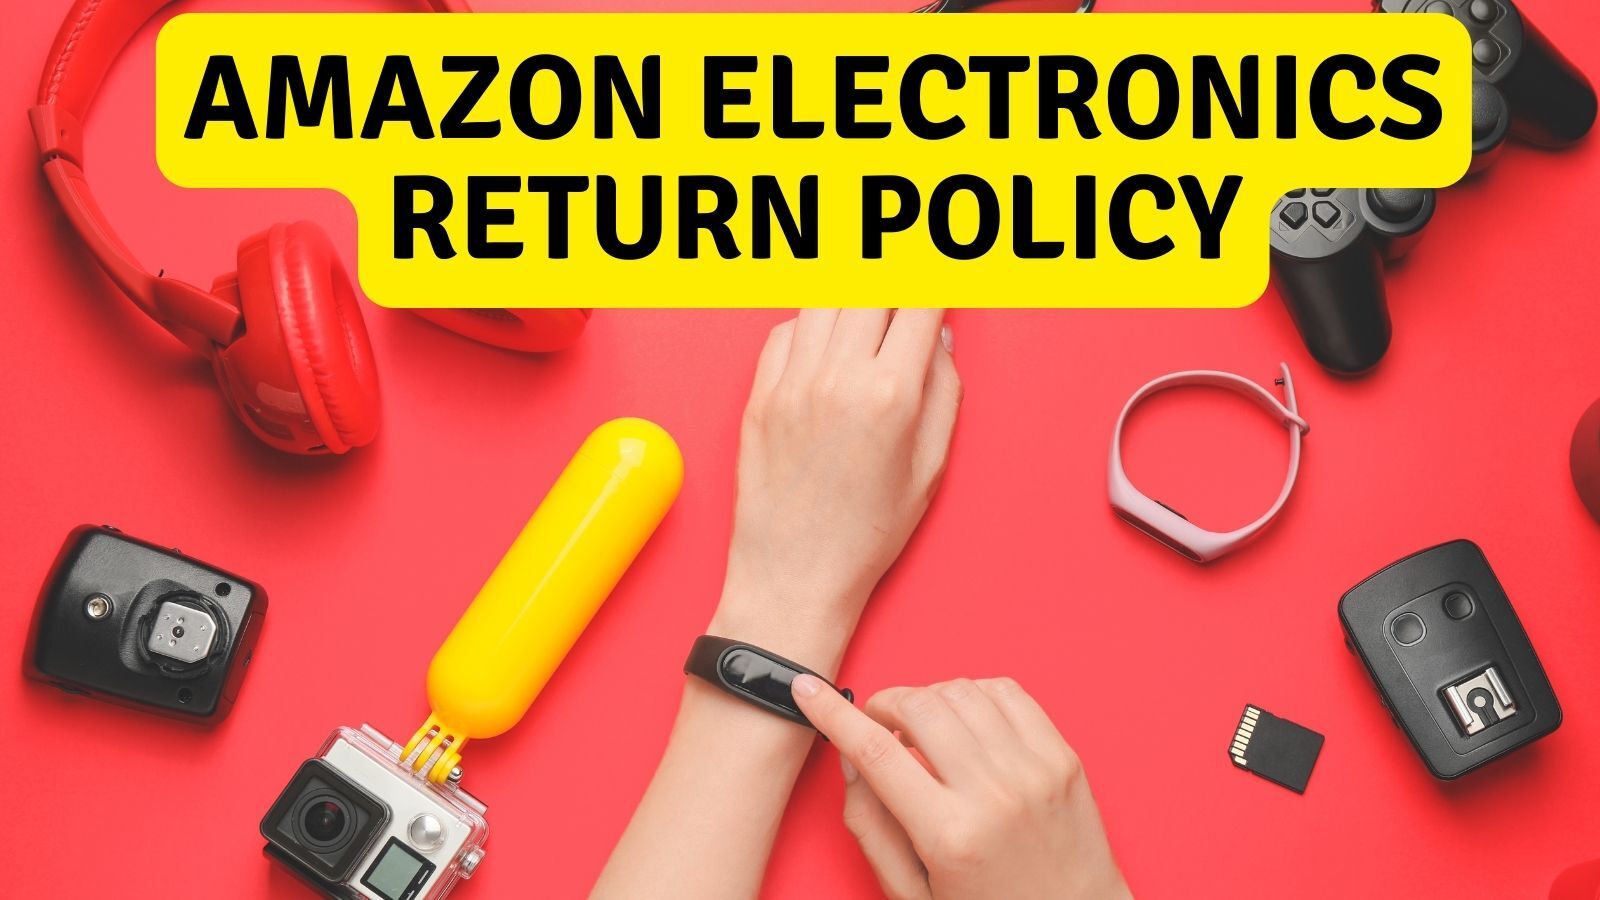 Amazon Electronics Return Policy (Something You Should Know)